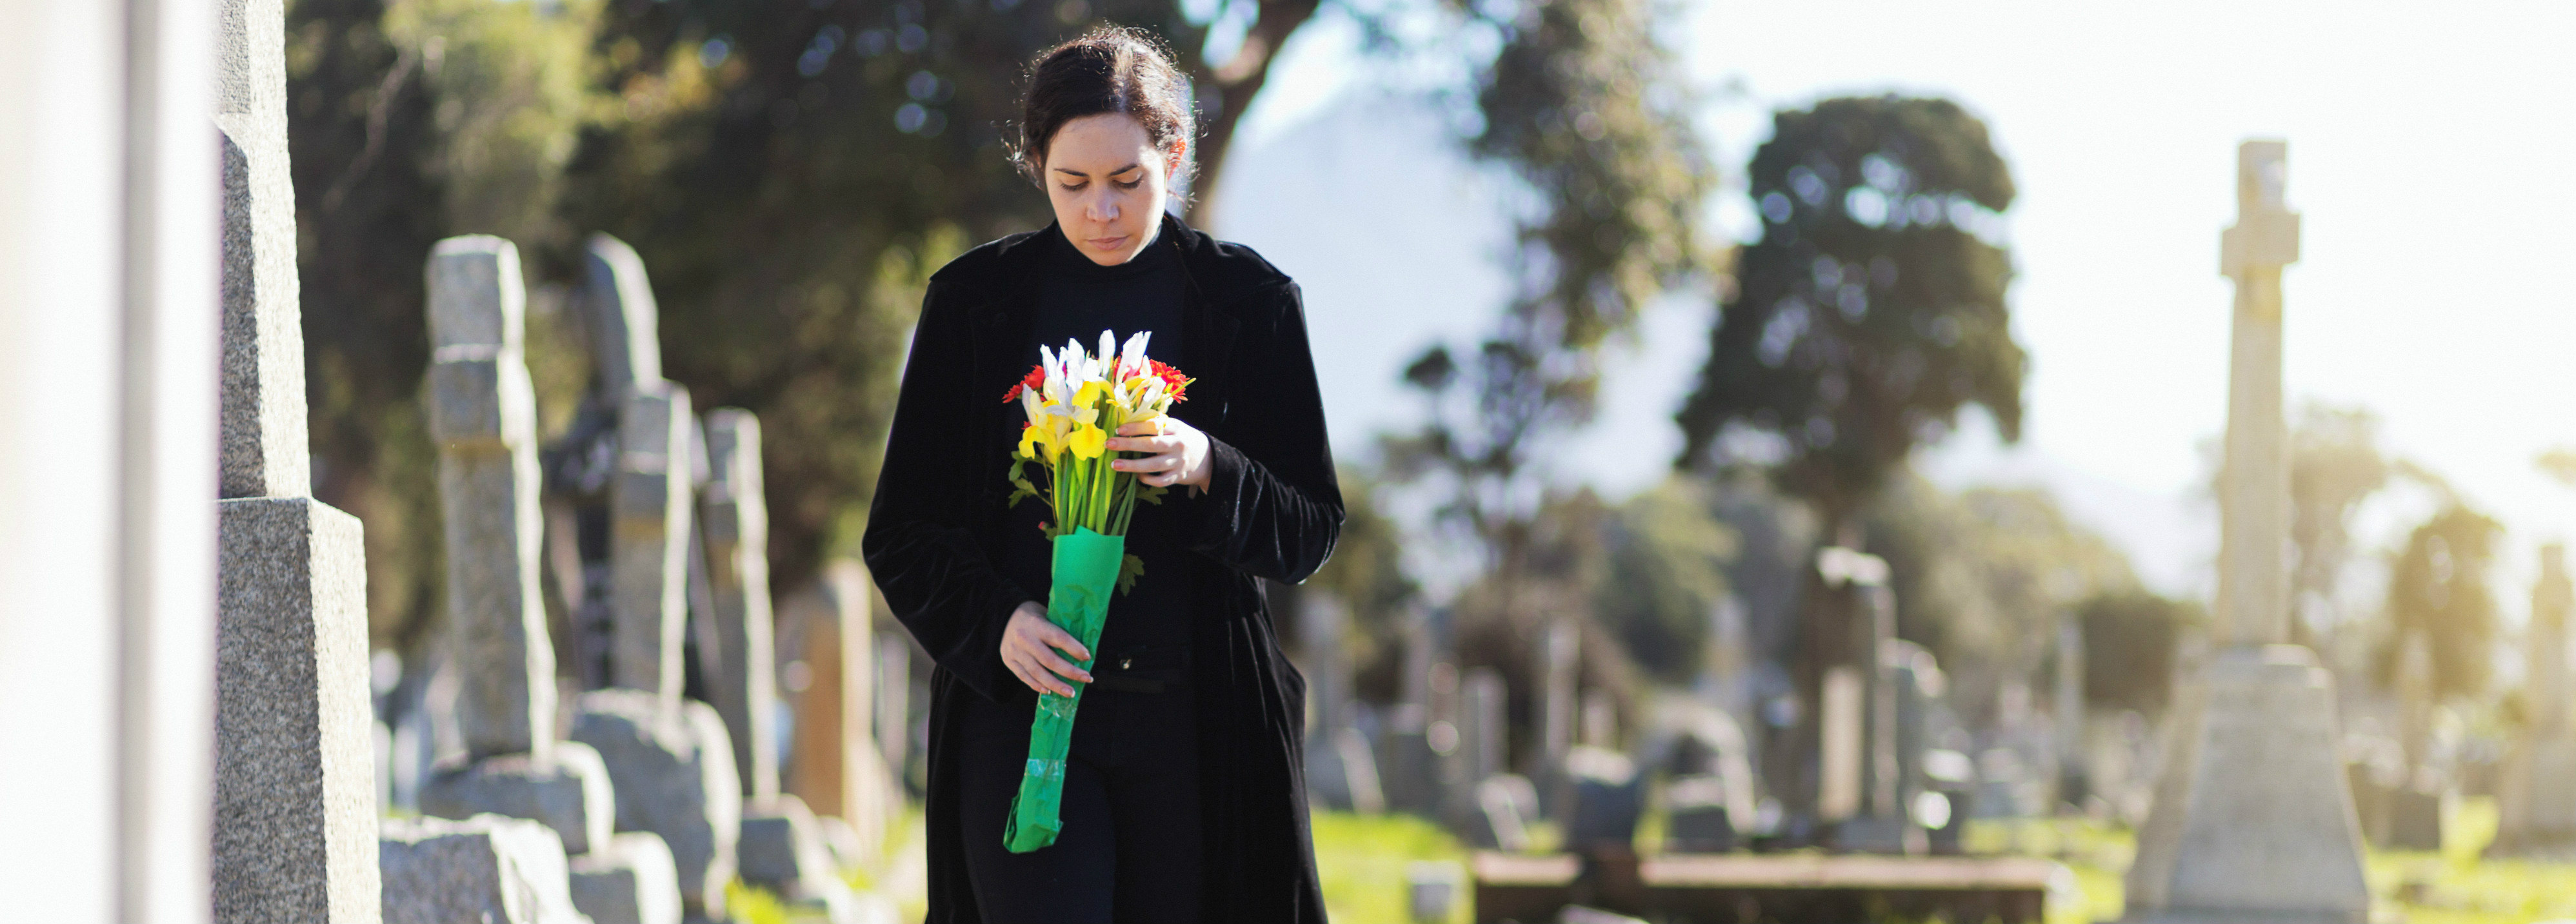 Woman wlaking through graveyard holding flowers